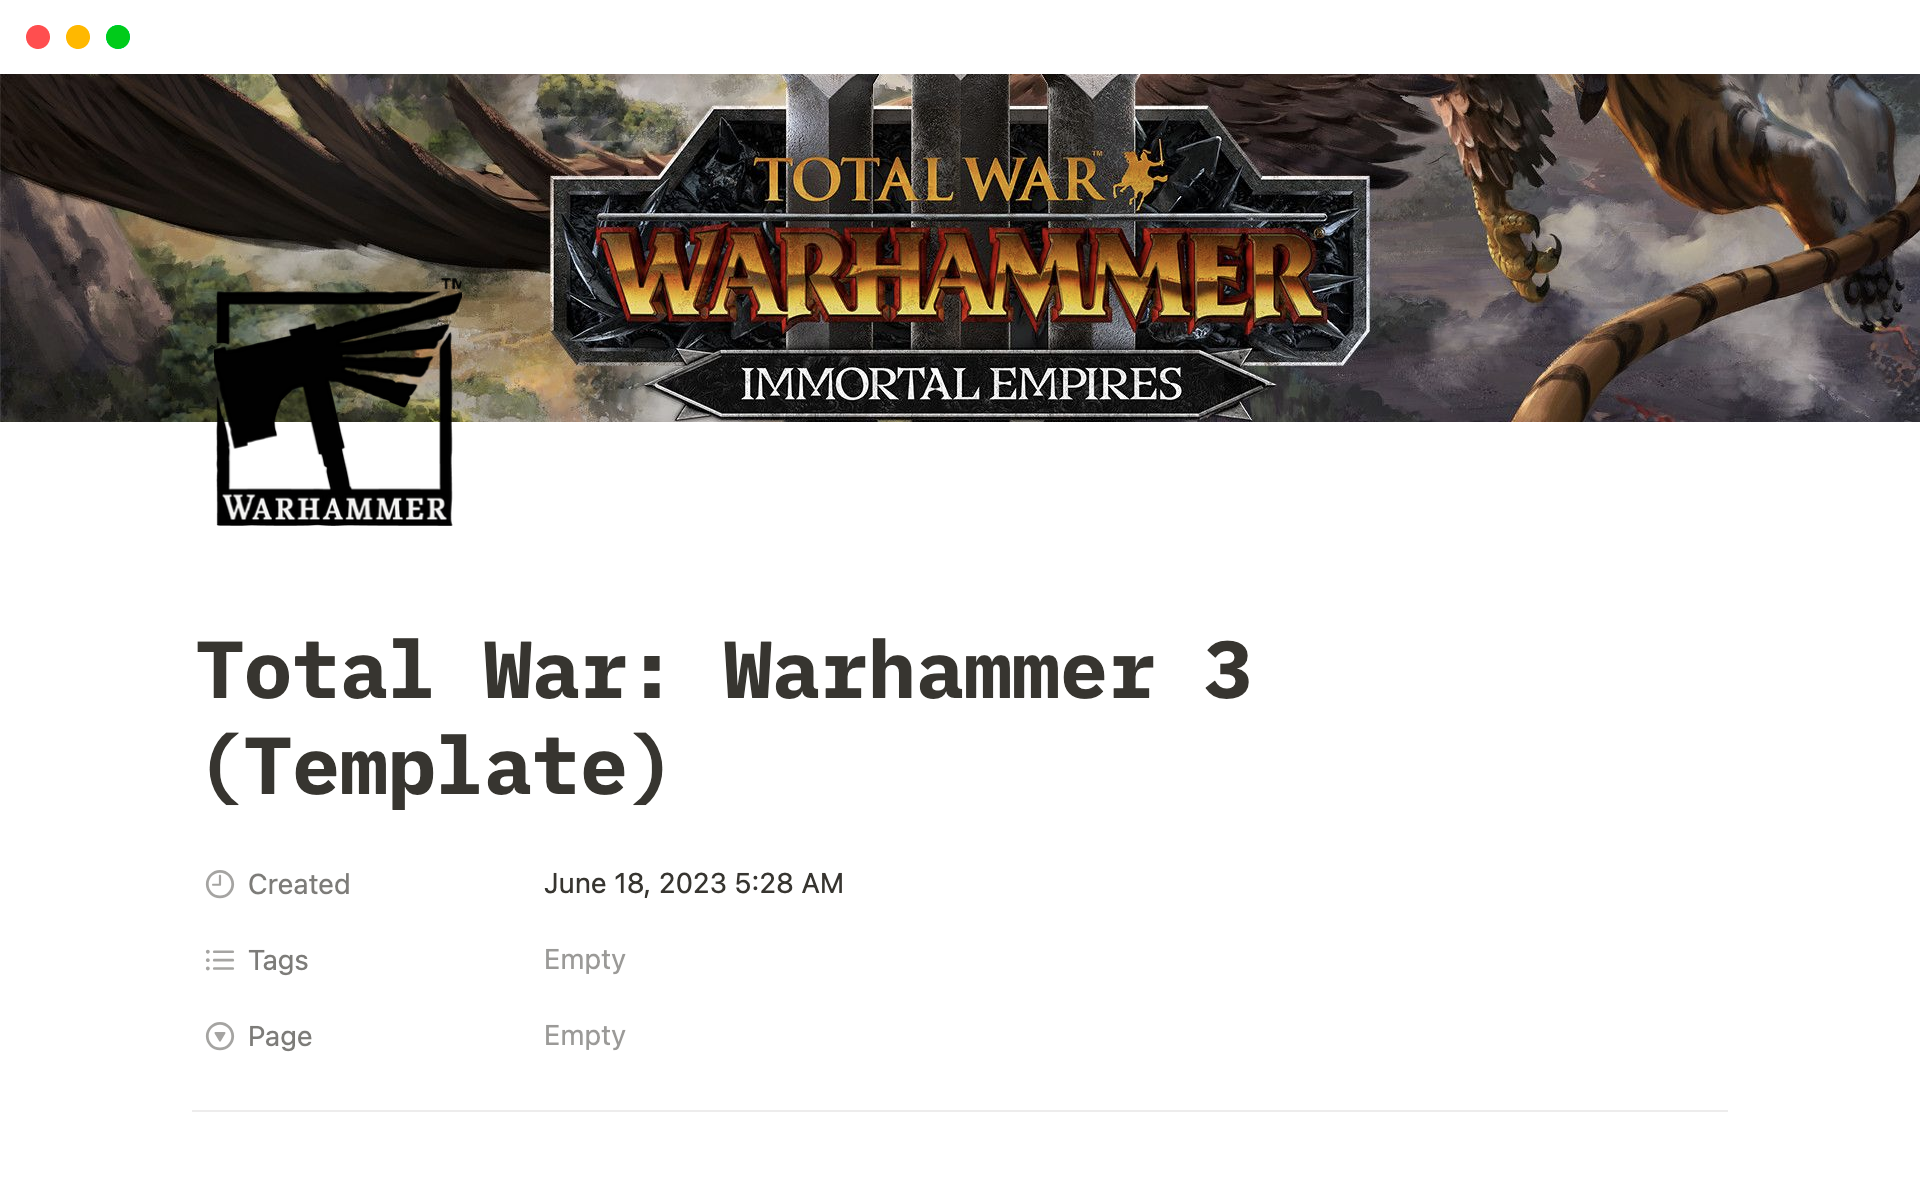 Vista previa de una plantilla para Warhammer 3 Total War Faction Tracker